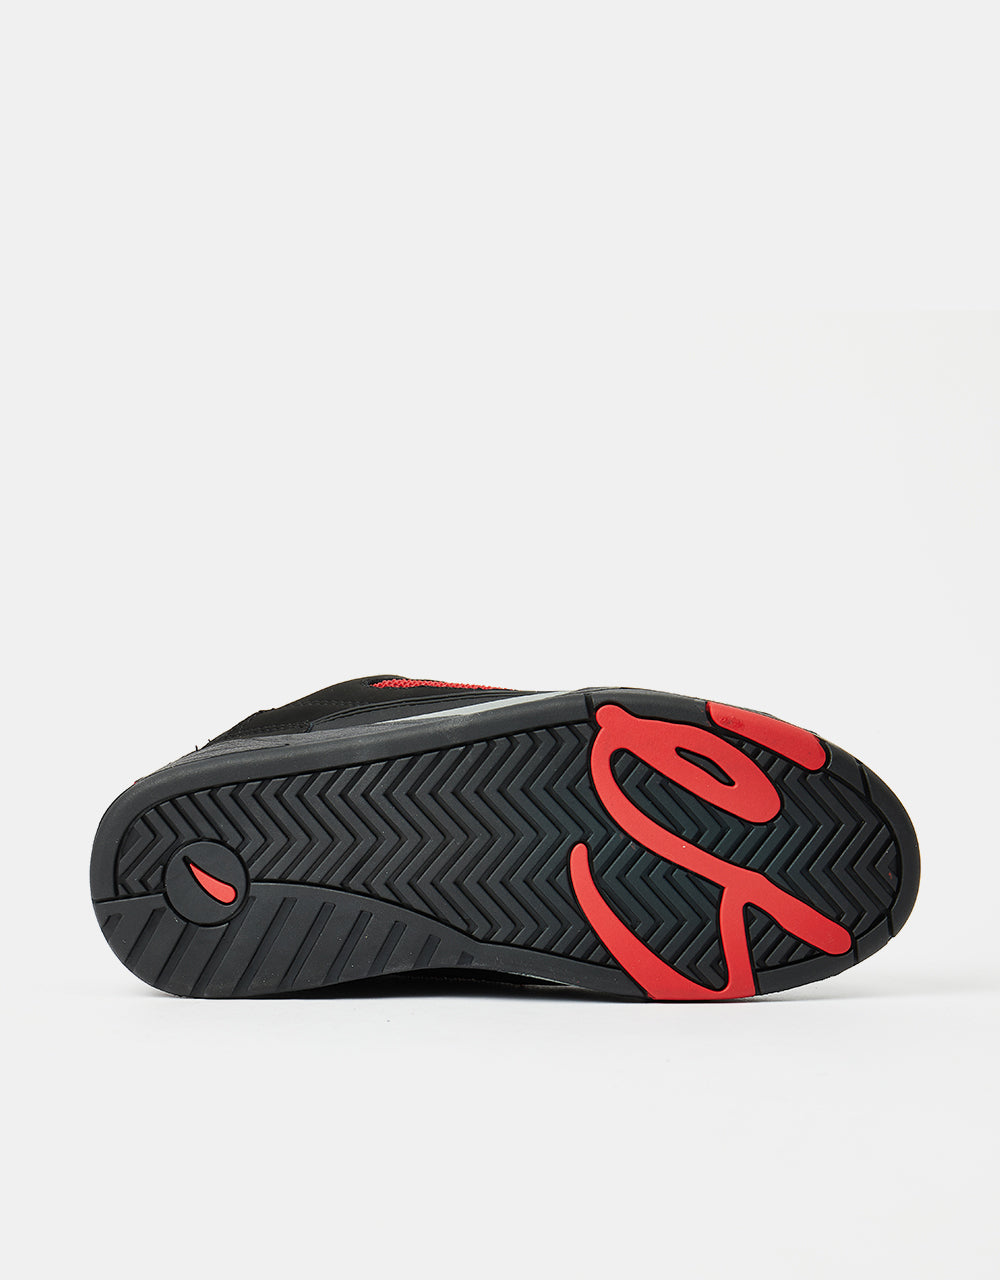 éS Muska Skate Shoes - Black/Red